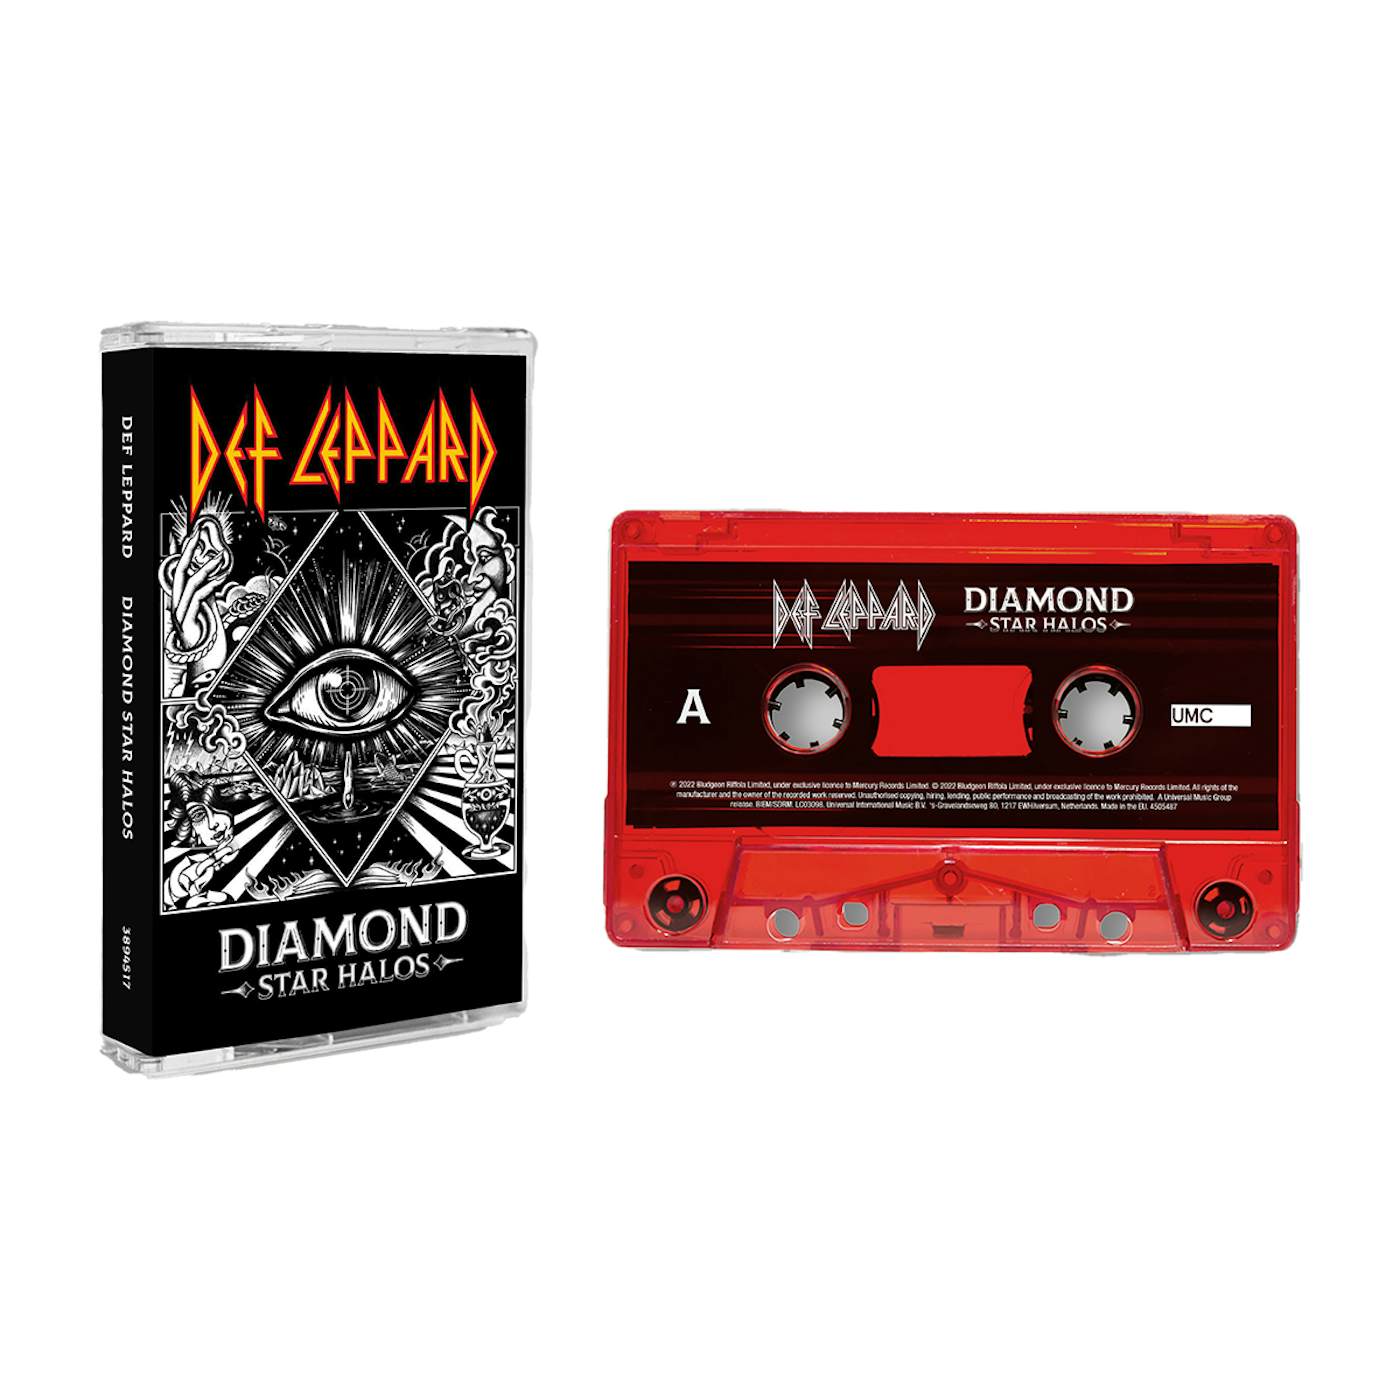 Def Leppard Diamond Star Halos Cassette